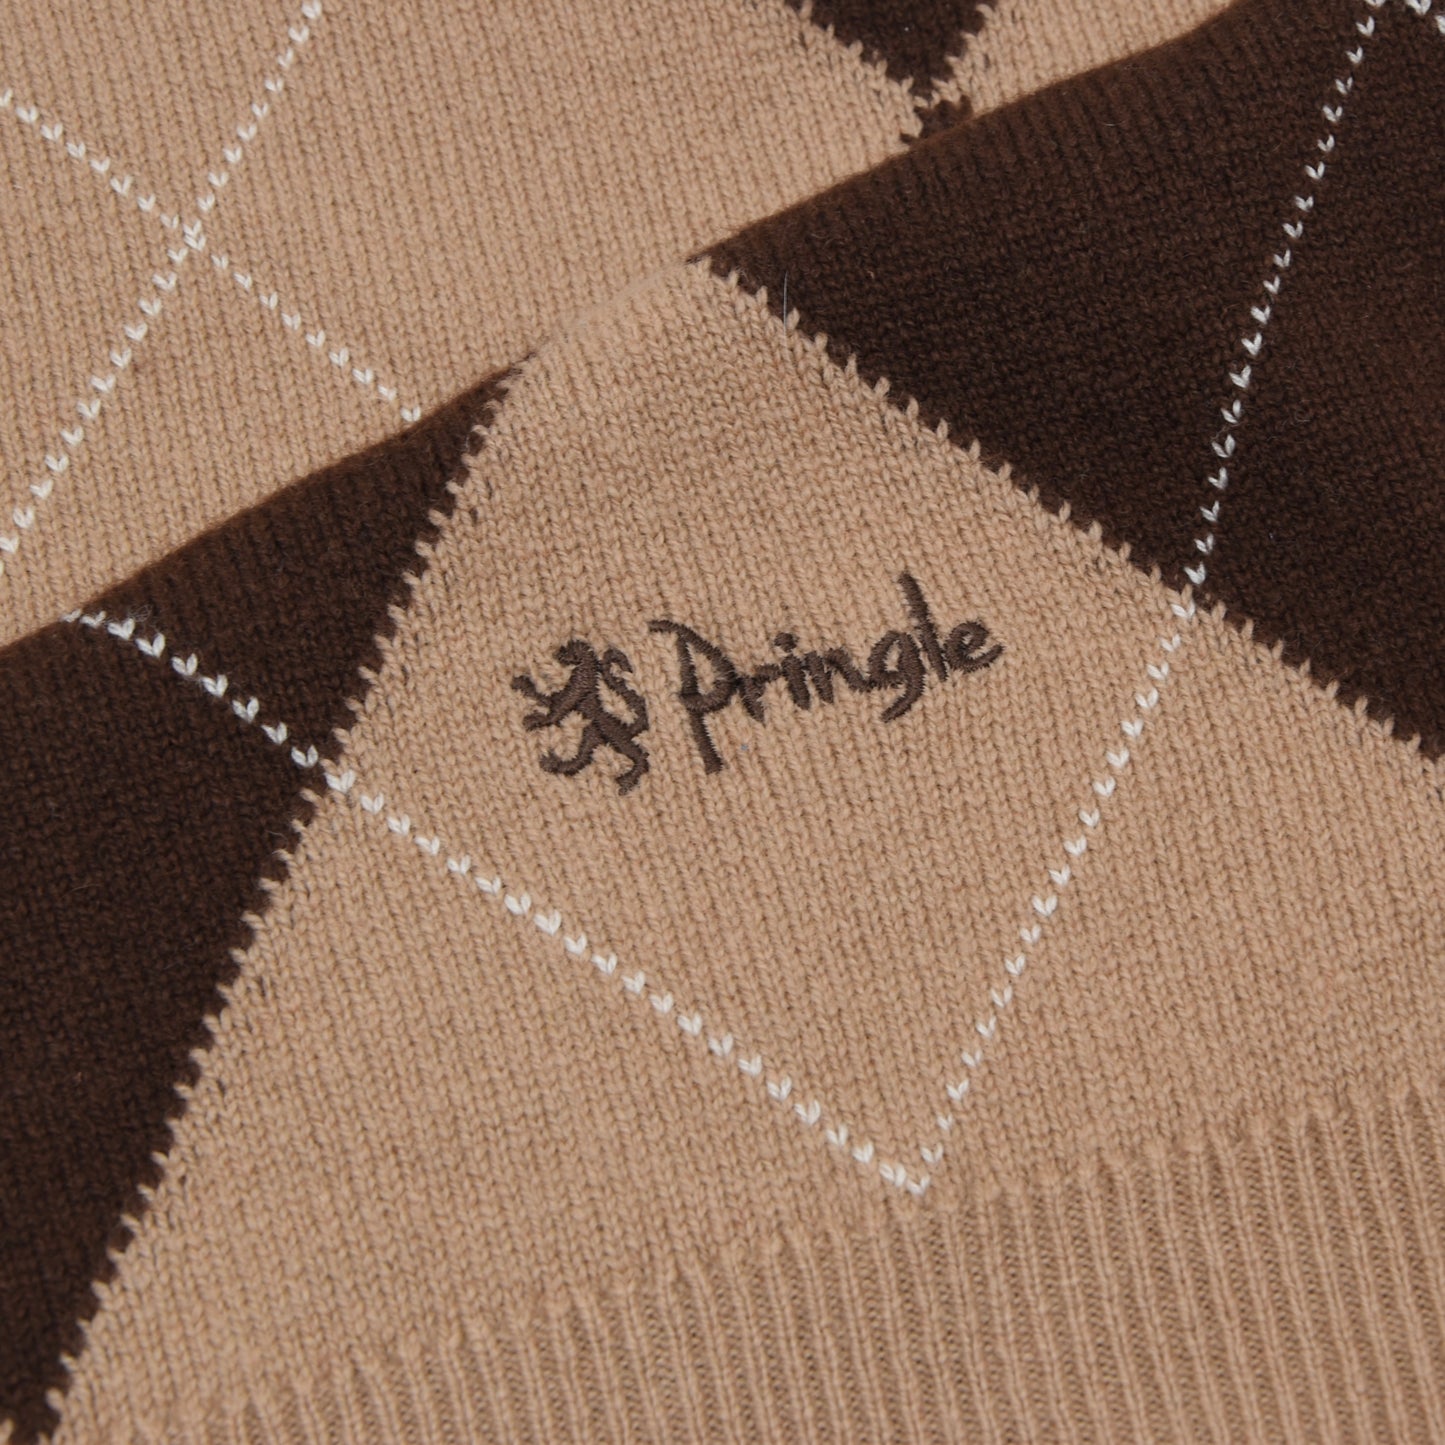 Pringle of Scotland Wool Argyle Sweater Size S - Tan